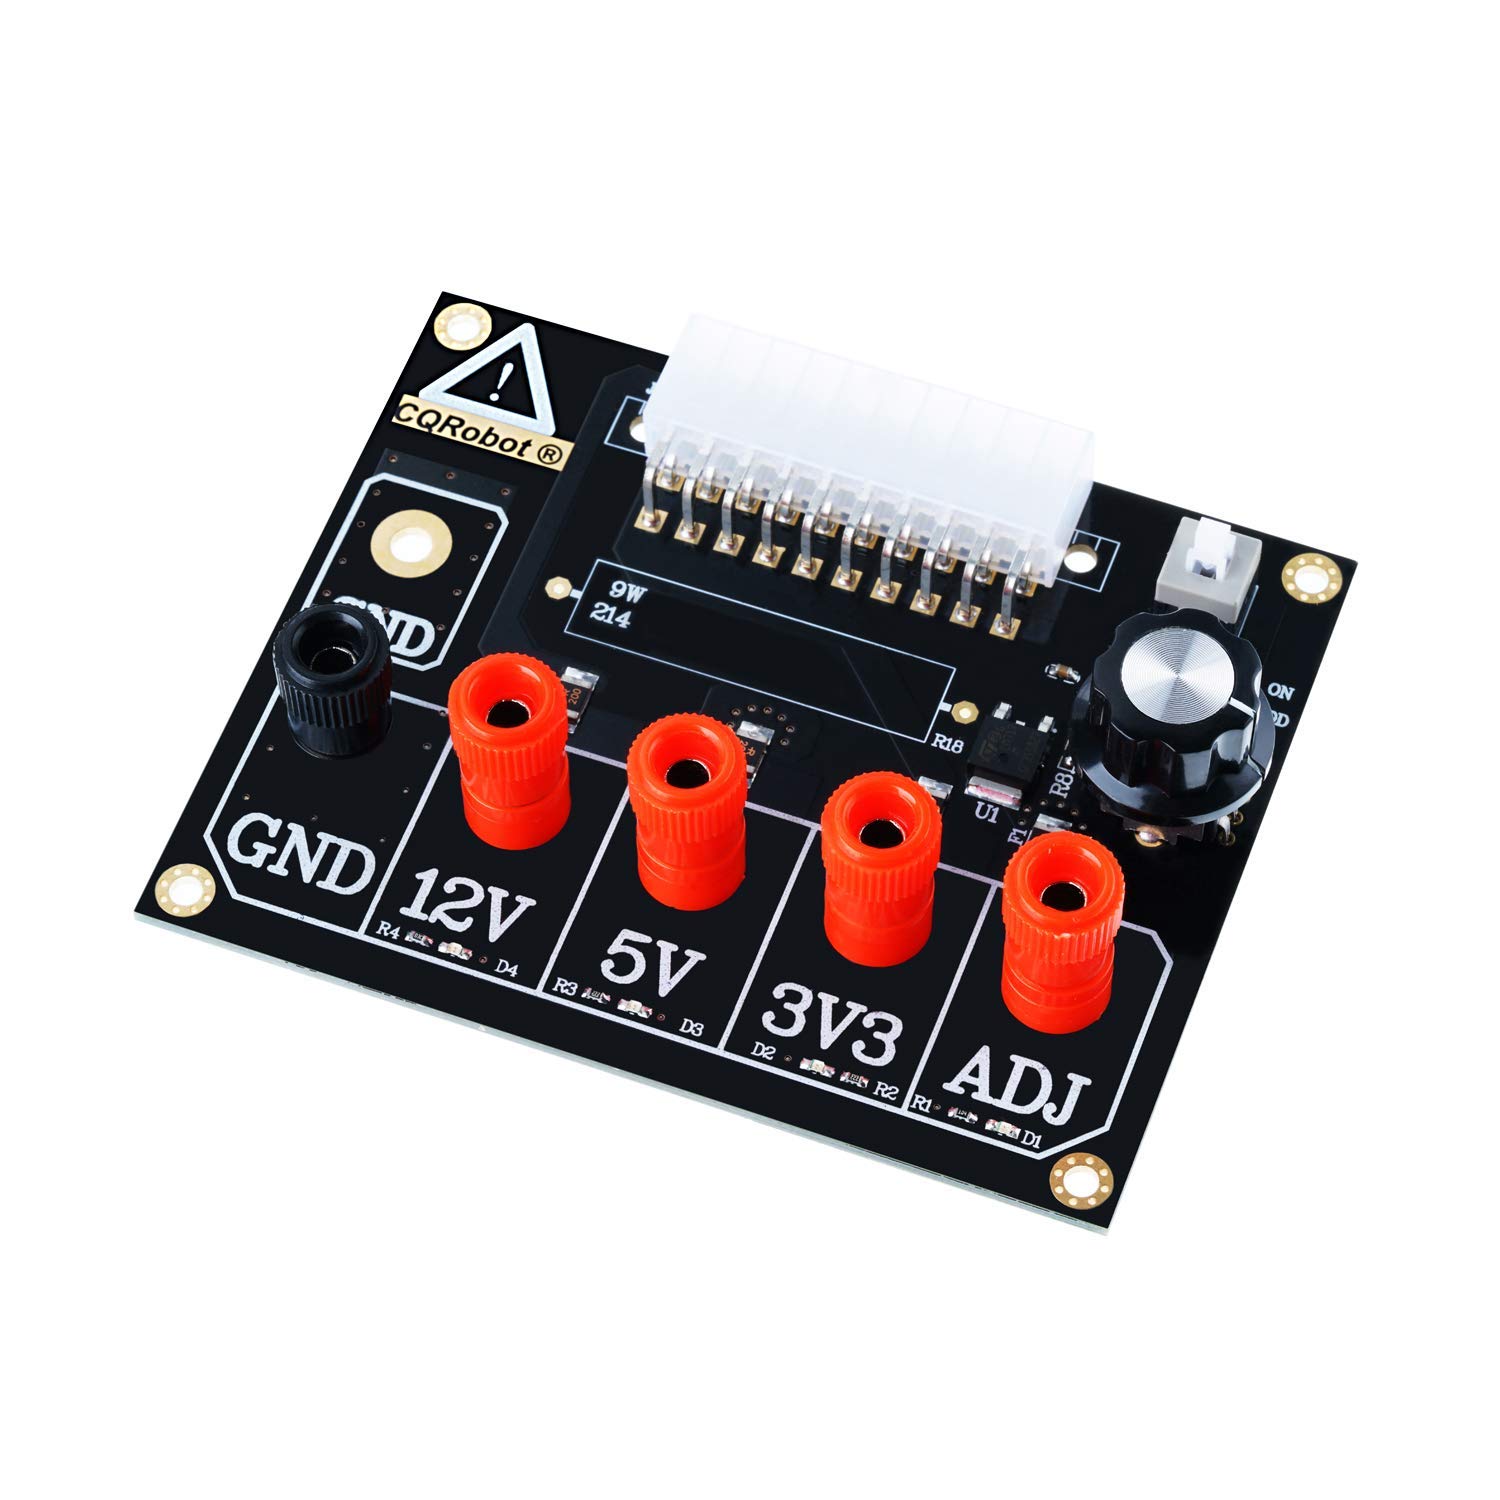 ATX Power Expansion Board Kit (with Acrylic Case), Onboard ADJ Adjustable Voltage Knob, Supports 3.3V/5V/12V and 1.5V-9.0V (ADJ) Output Voltage, 2A Maximum Output, Reset Protection.